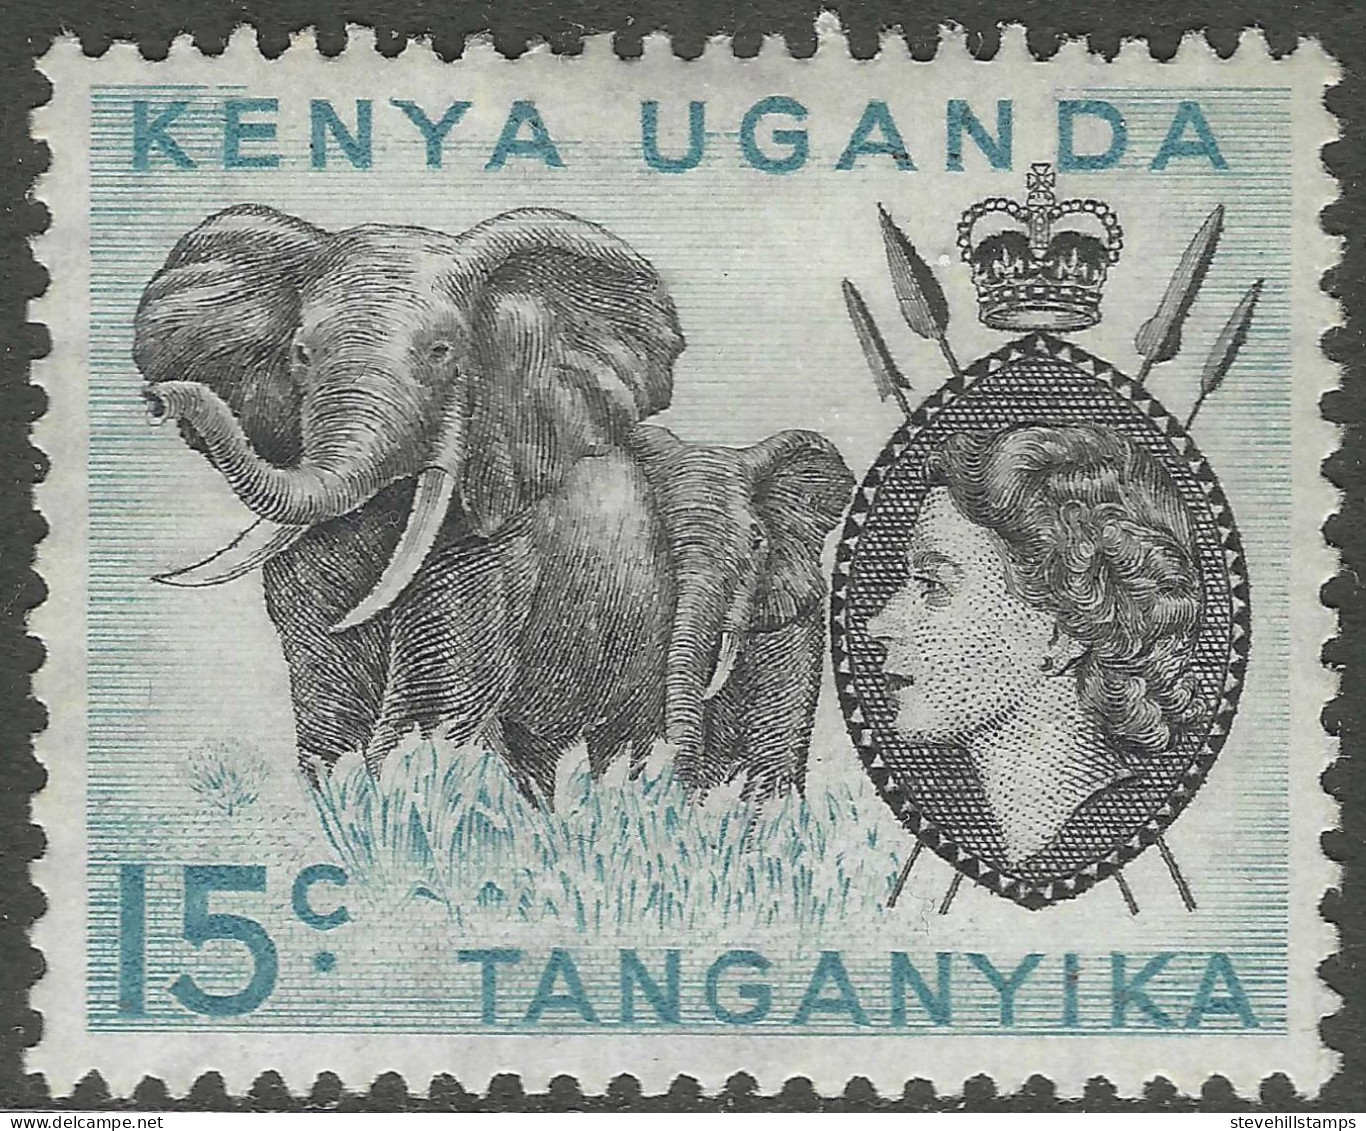 Kenya, Uganda & Tanganyika. 1954-59 QEII. 15c With Stop MH. SG 169a - Kenya, Uganda & Tanganyika